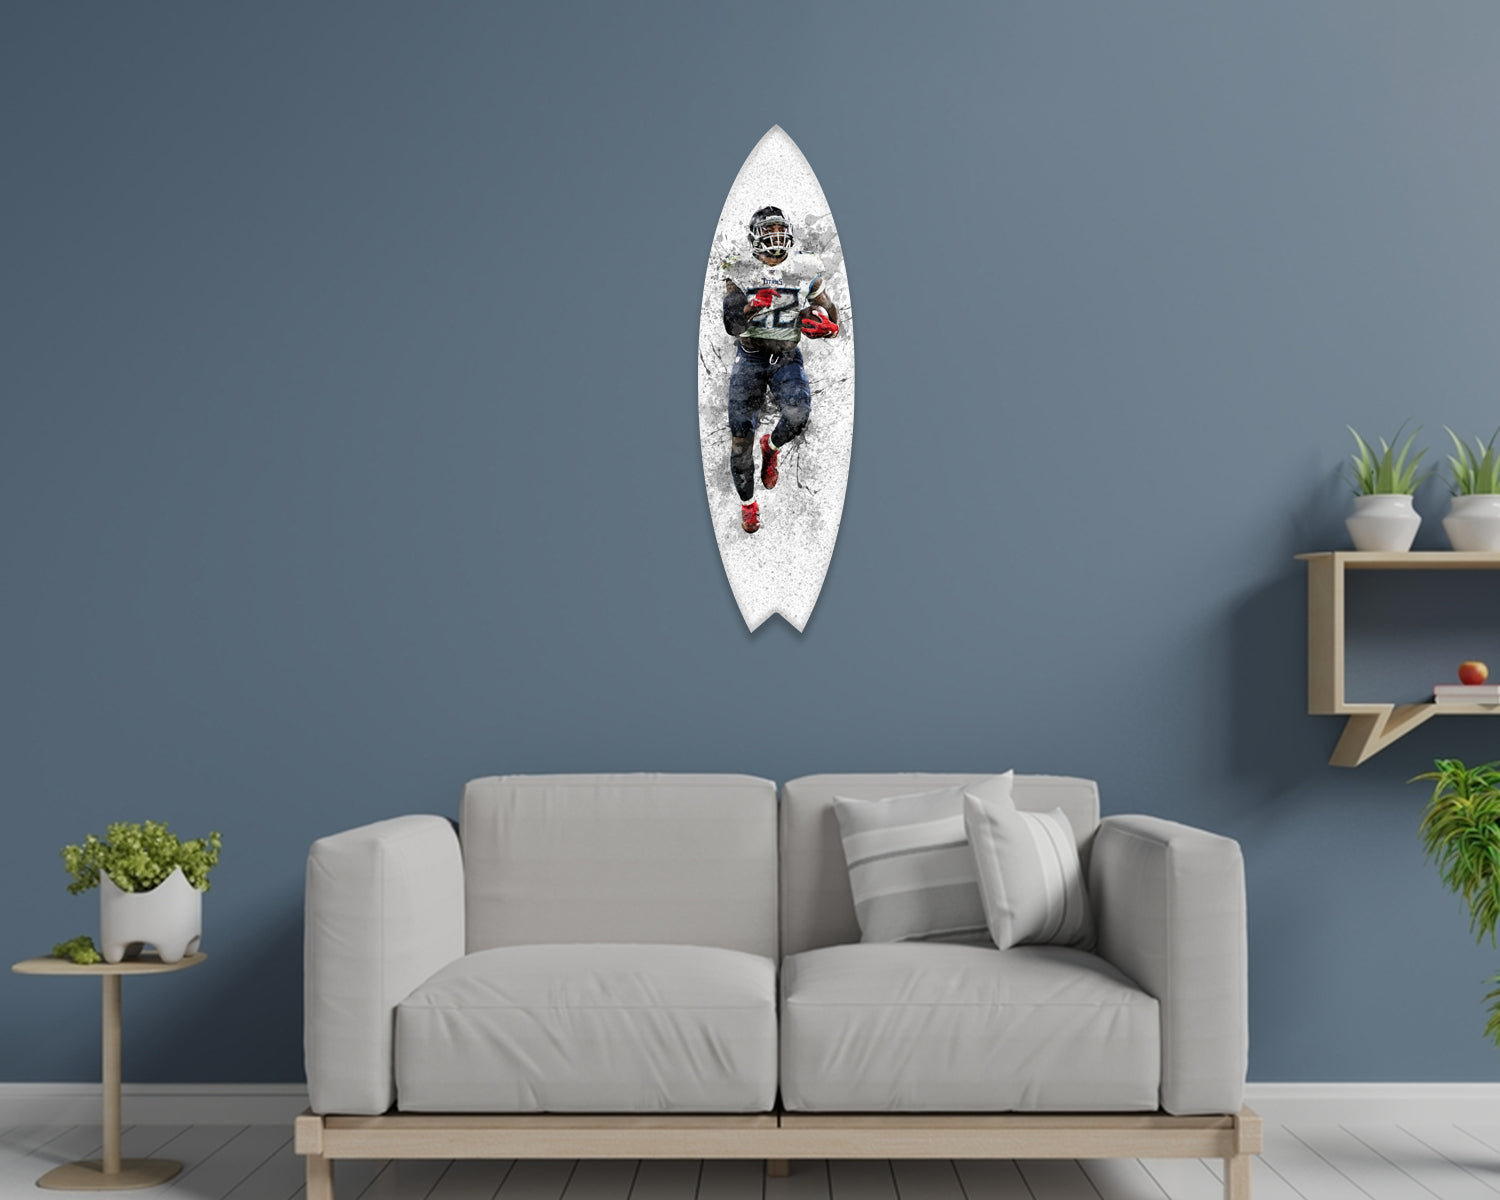 Derrick Henry Acrylic Surfboard Wall Art 